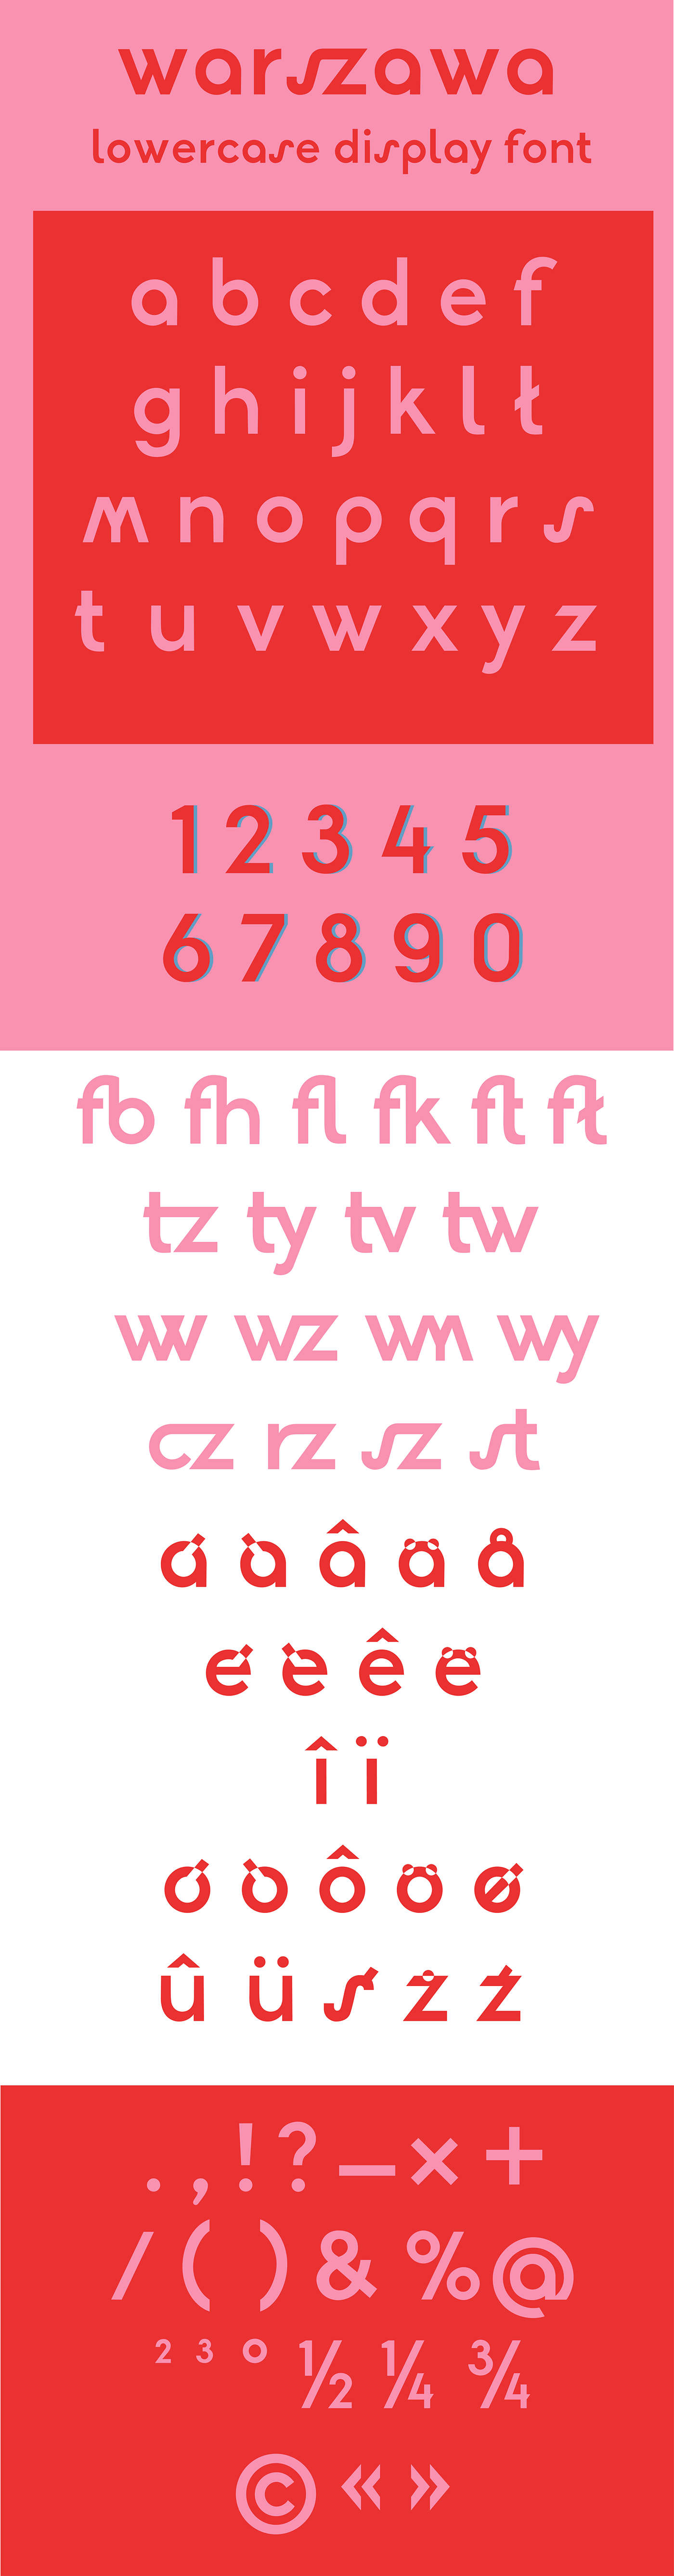 font Typeface glyph Script type Calligraphy   vintage letterpress PRL free